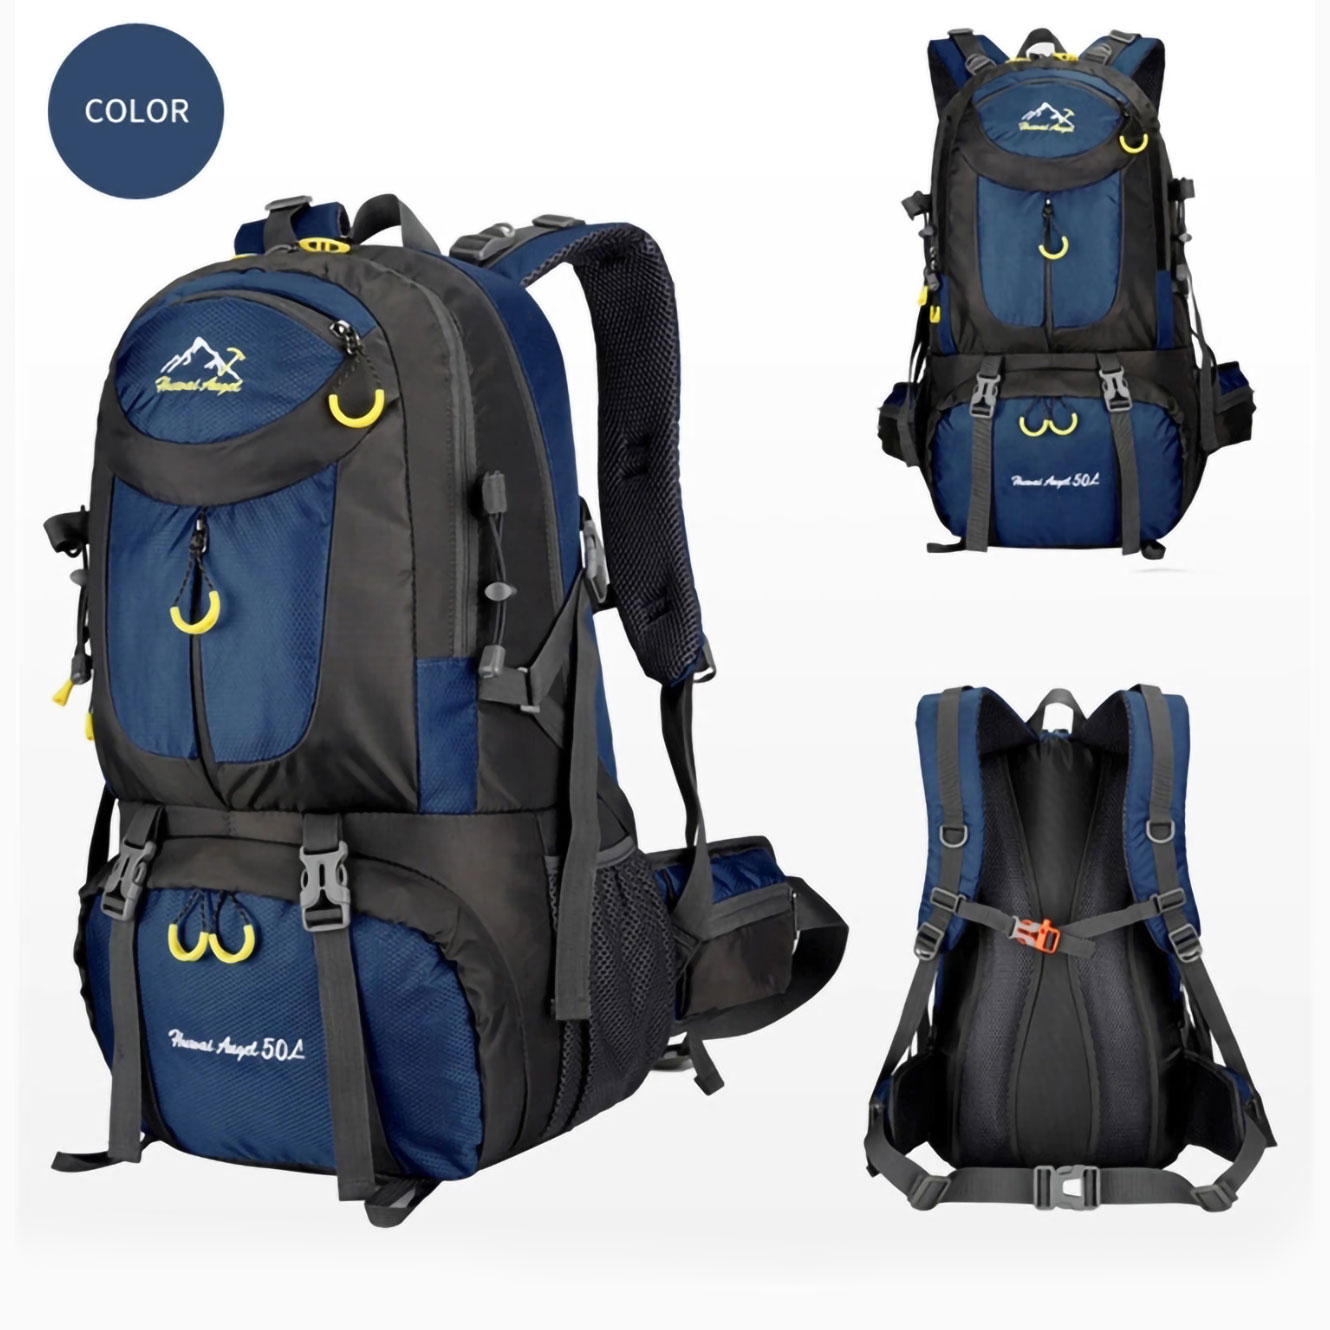 water resistant backpack travel bags